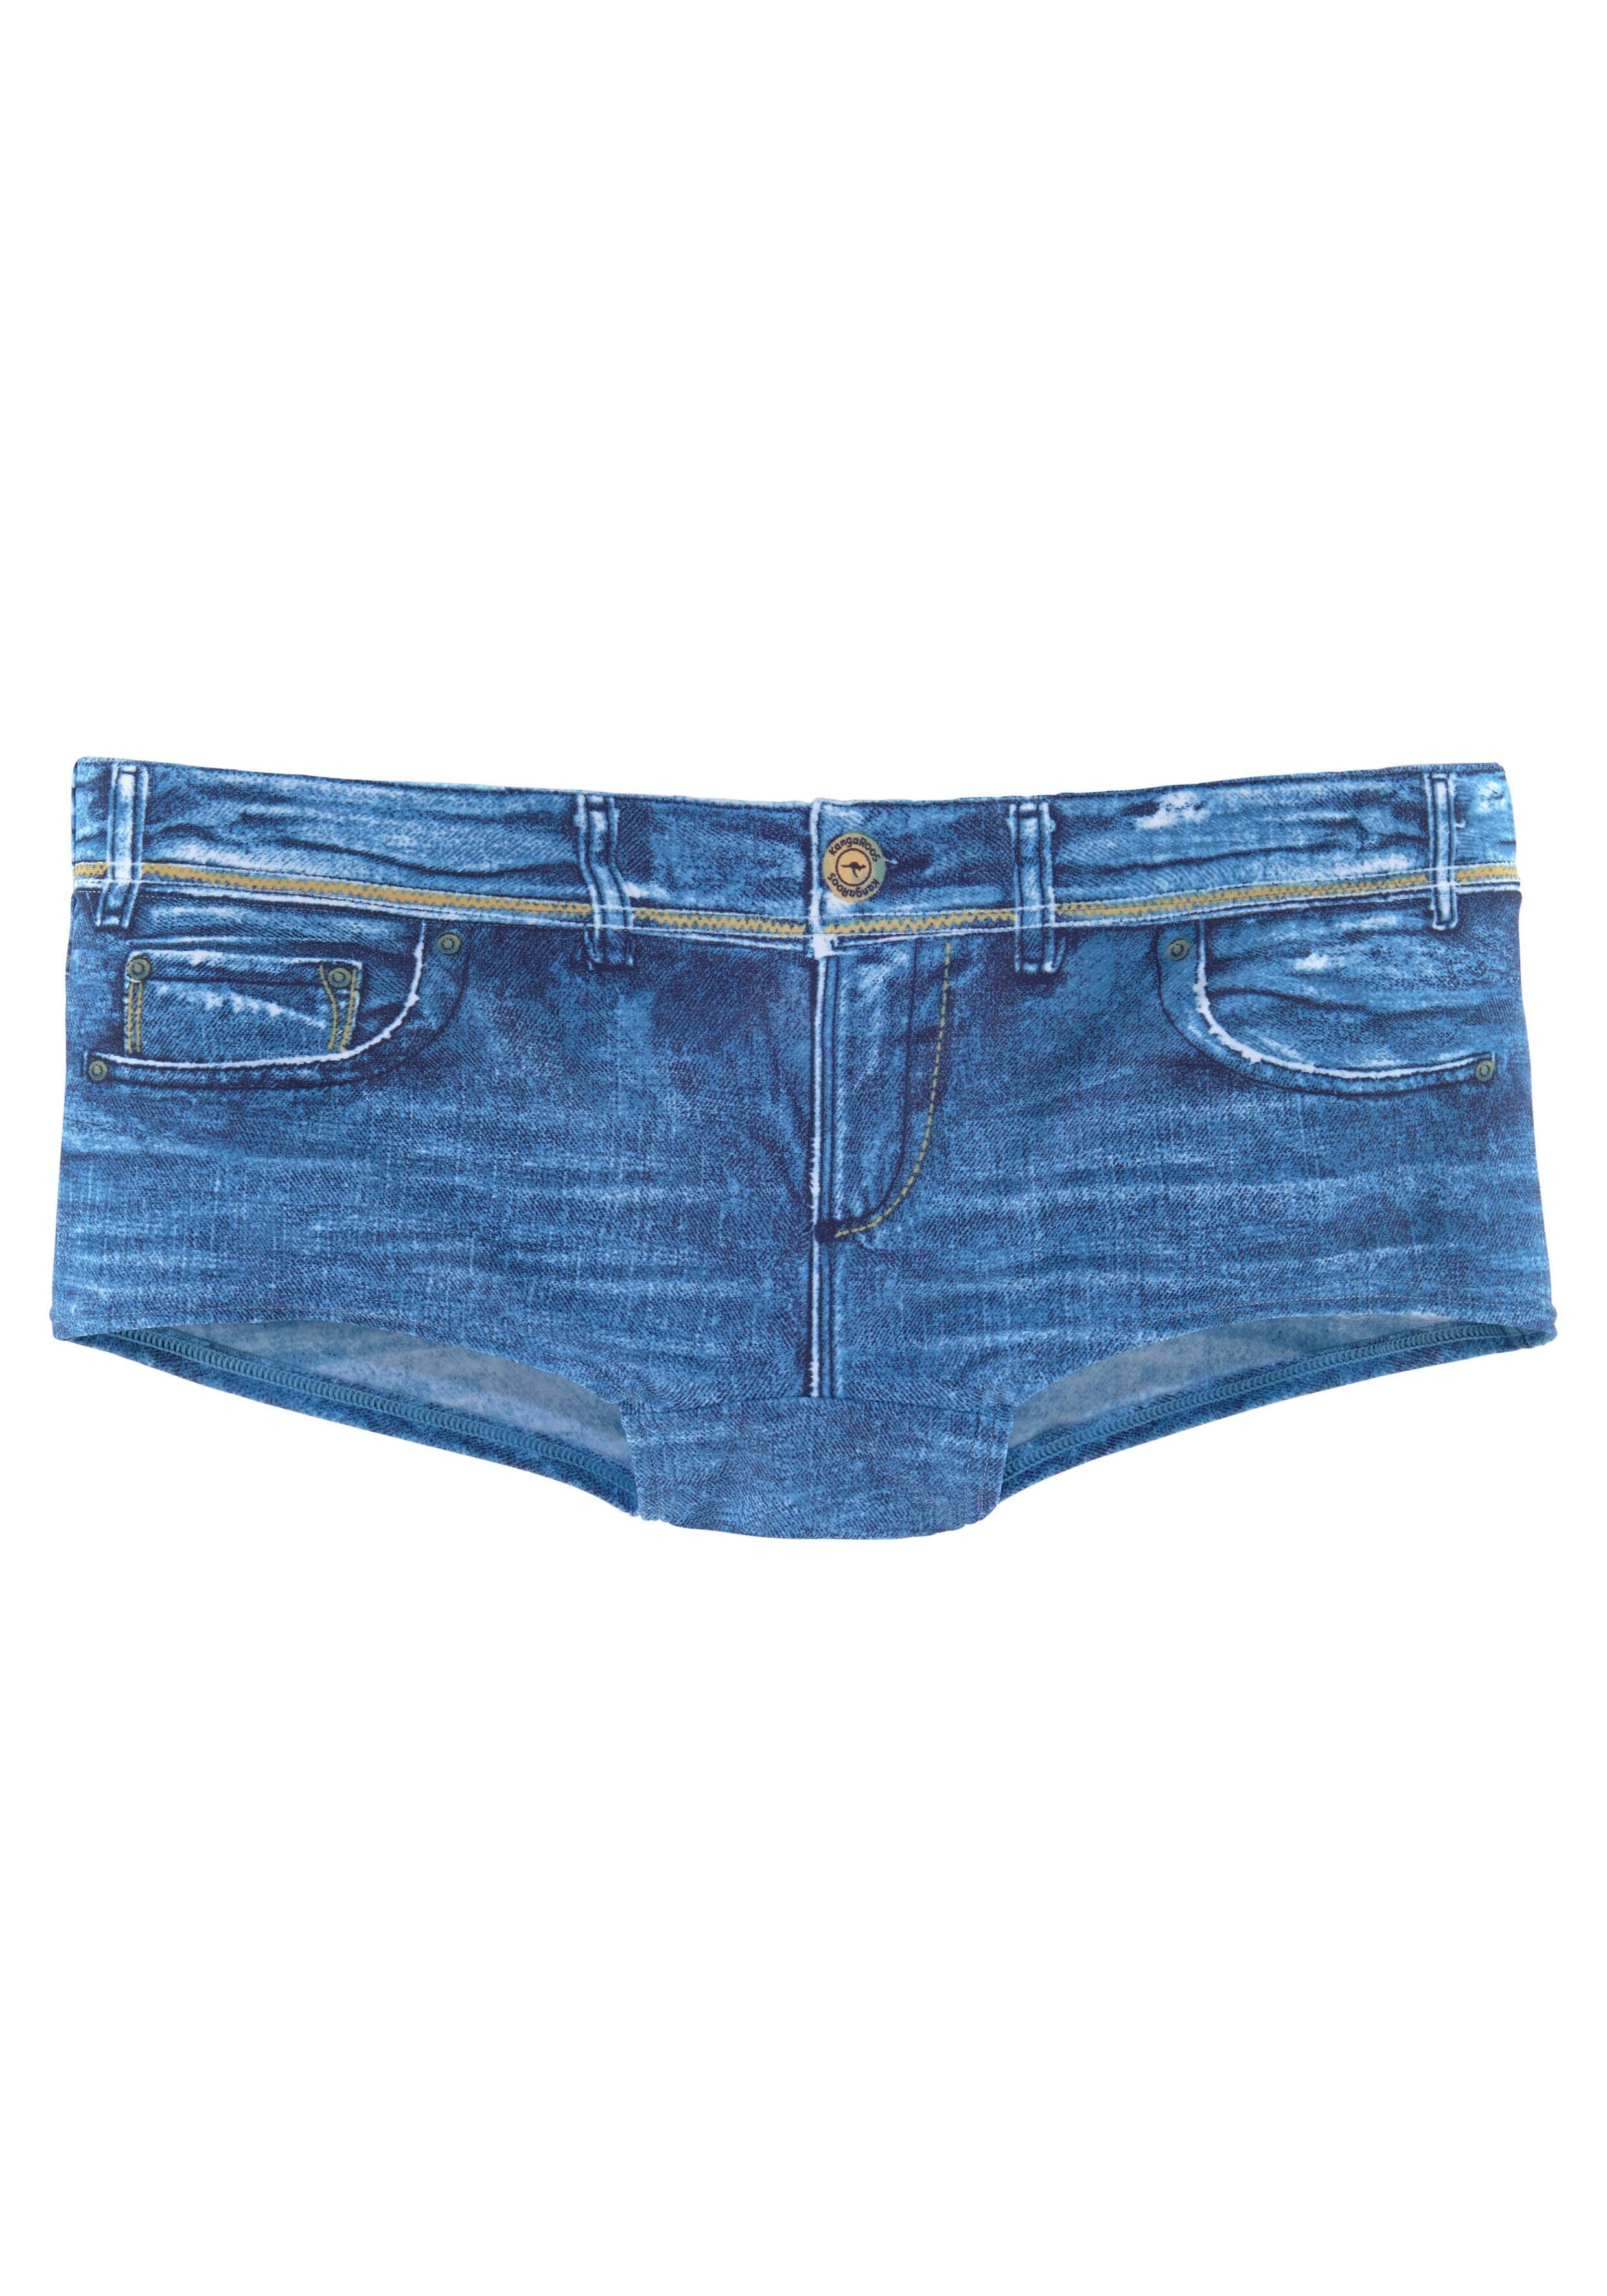 KangaROOS Bikini-Hotpants, in Jeans-Optik blau  122/128 134/140 146/152 158/164 170/176